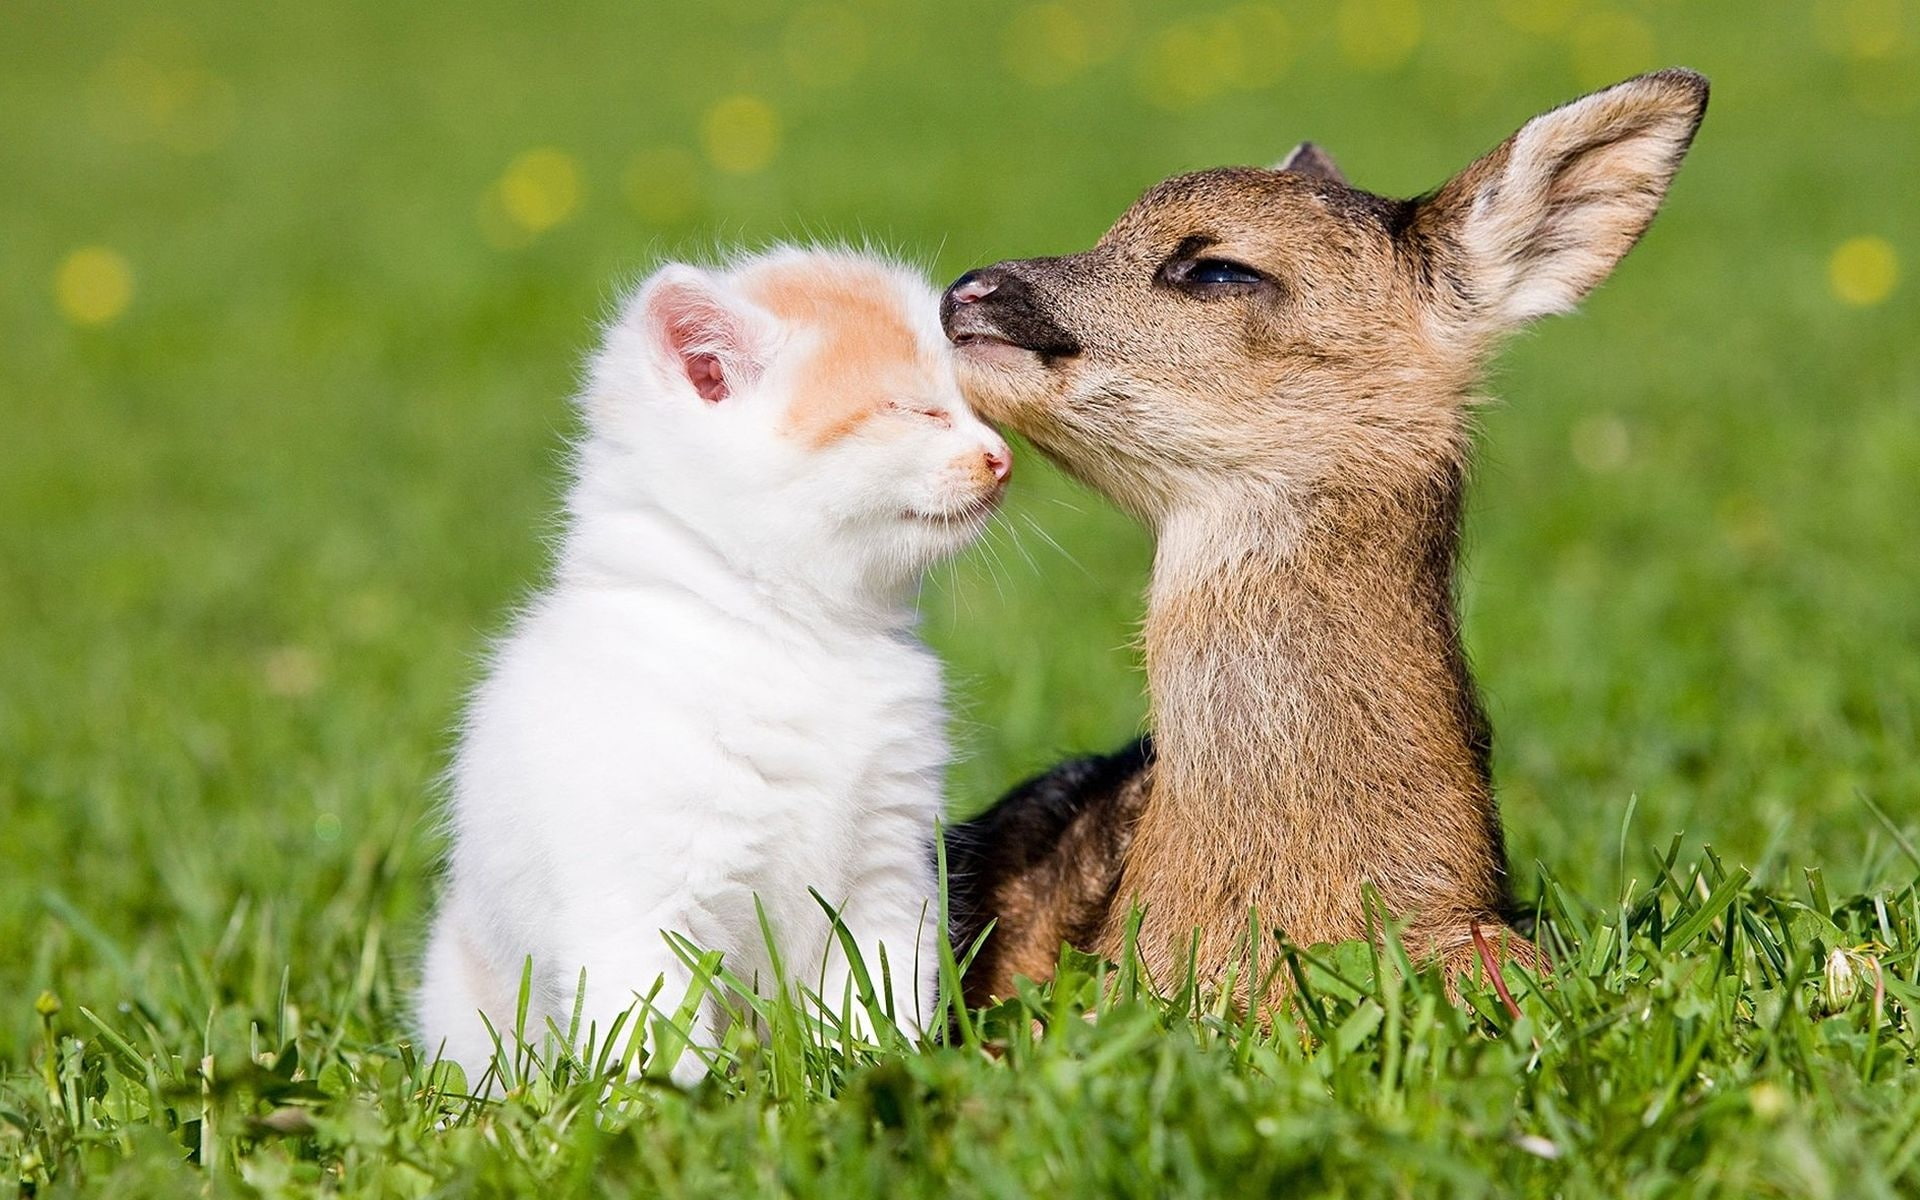 Kitten and little deer's friendship, white long fur cat and brown deer